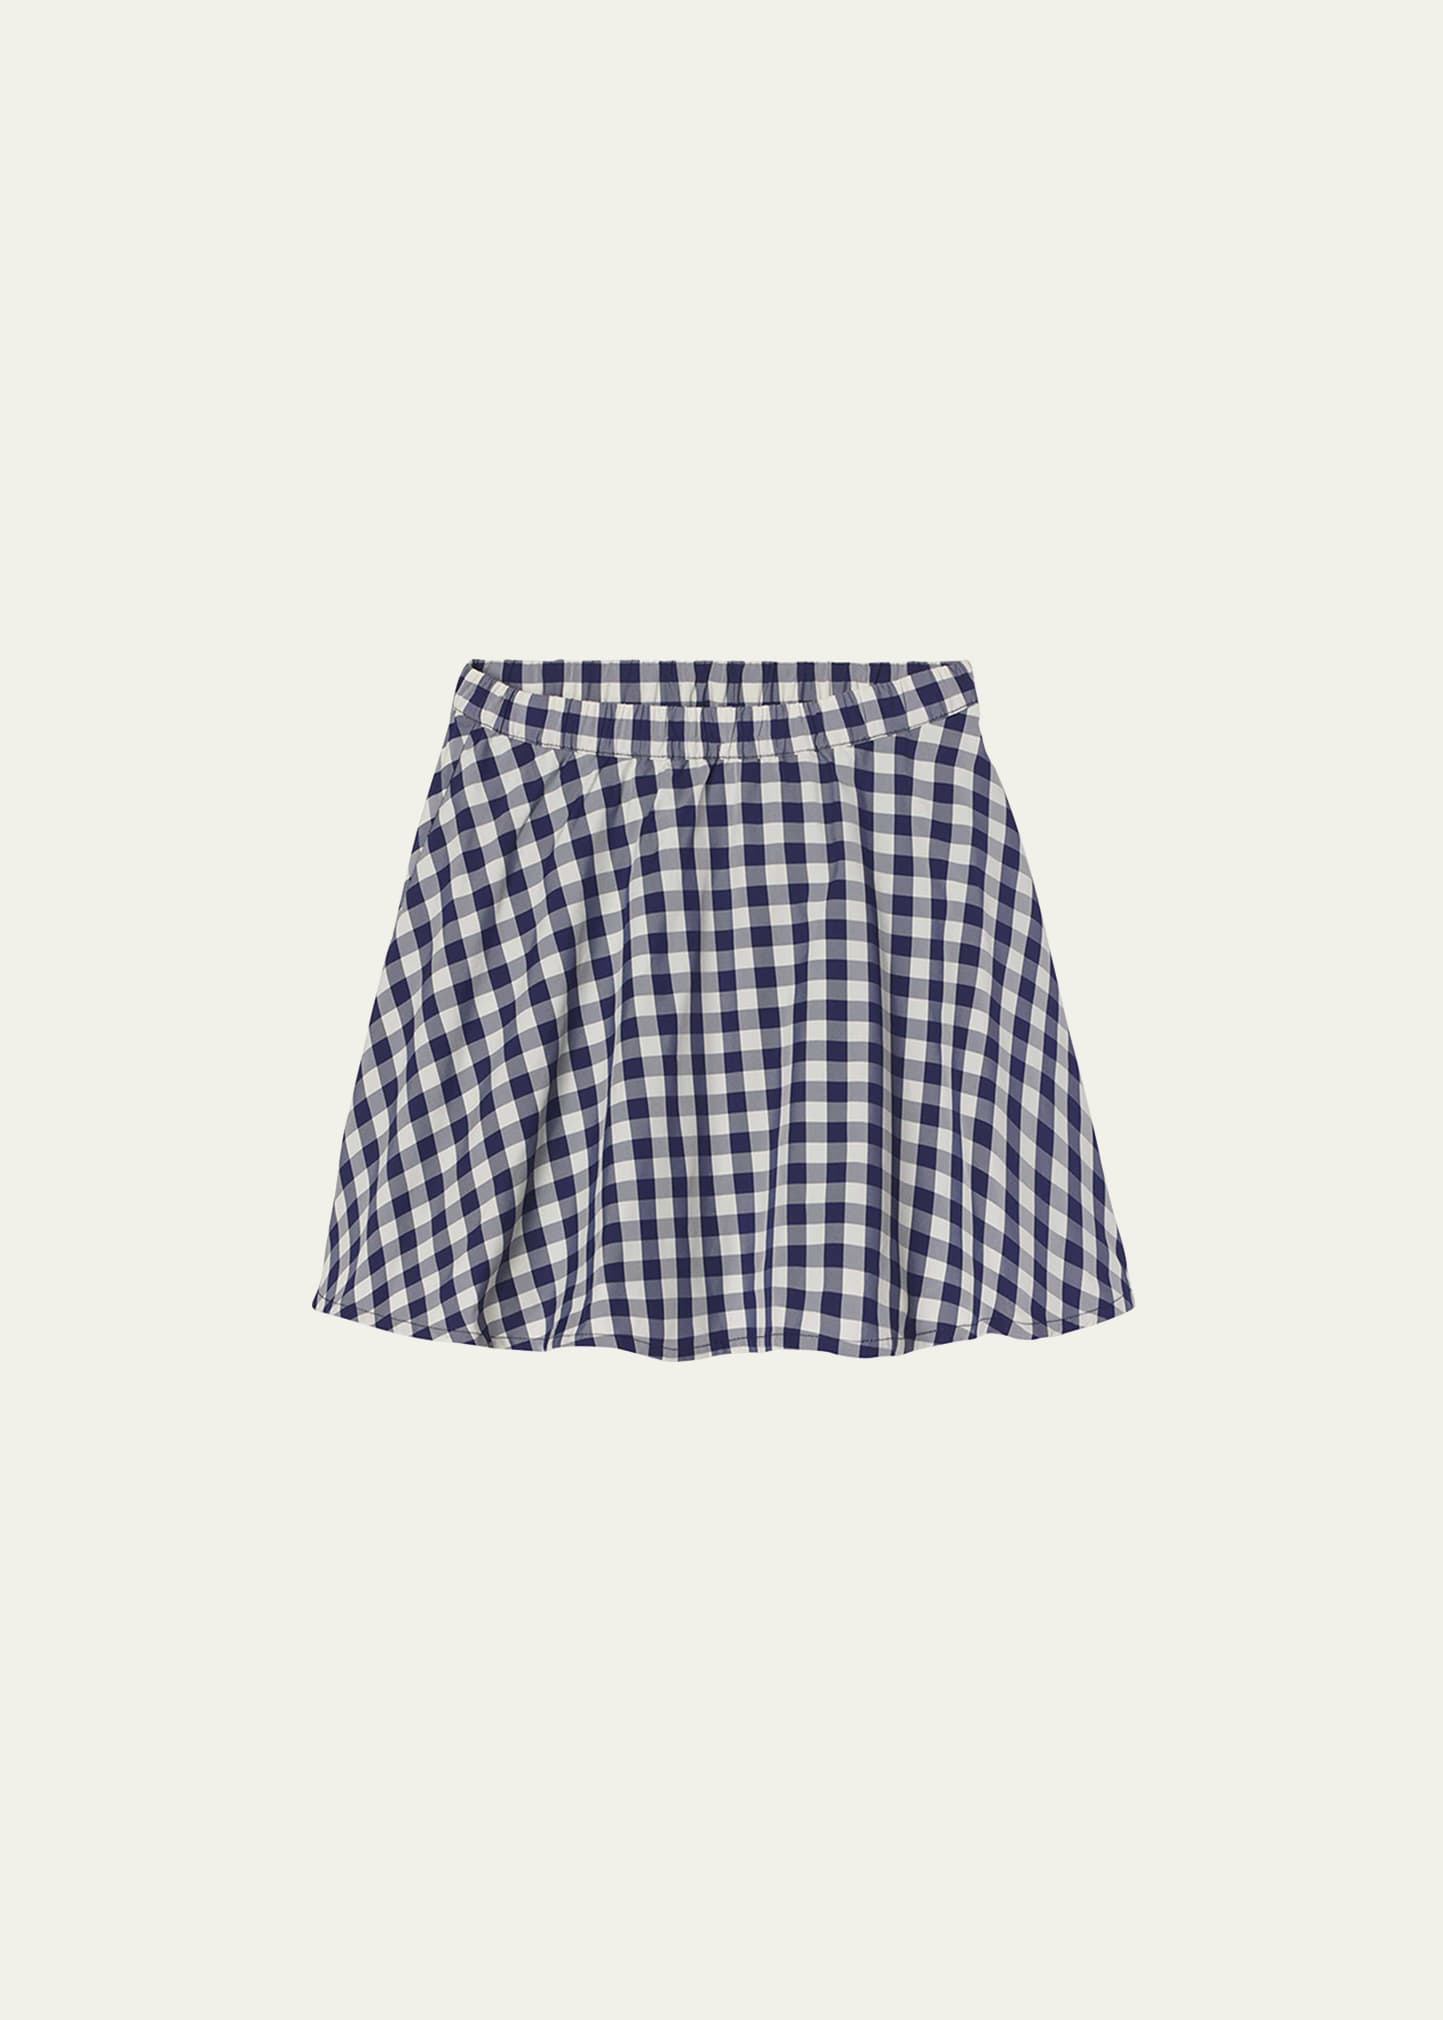 Girl's Sabrina Gingham Taffeta-Print Skirt, Size XS-XL